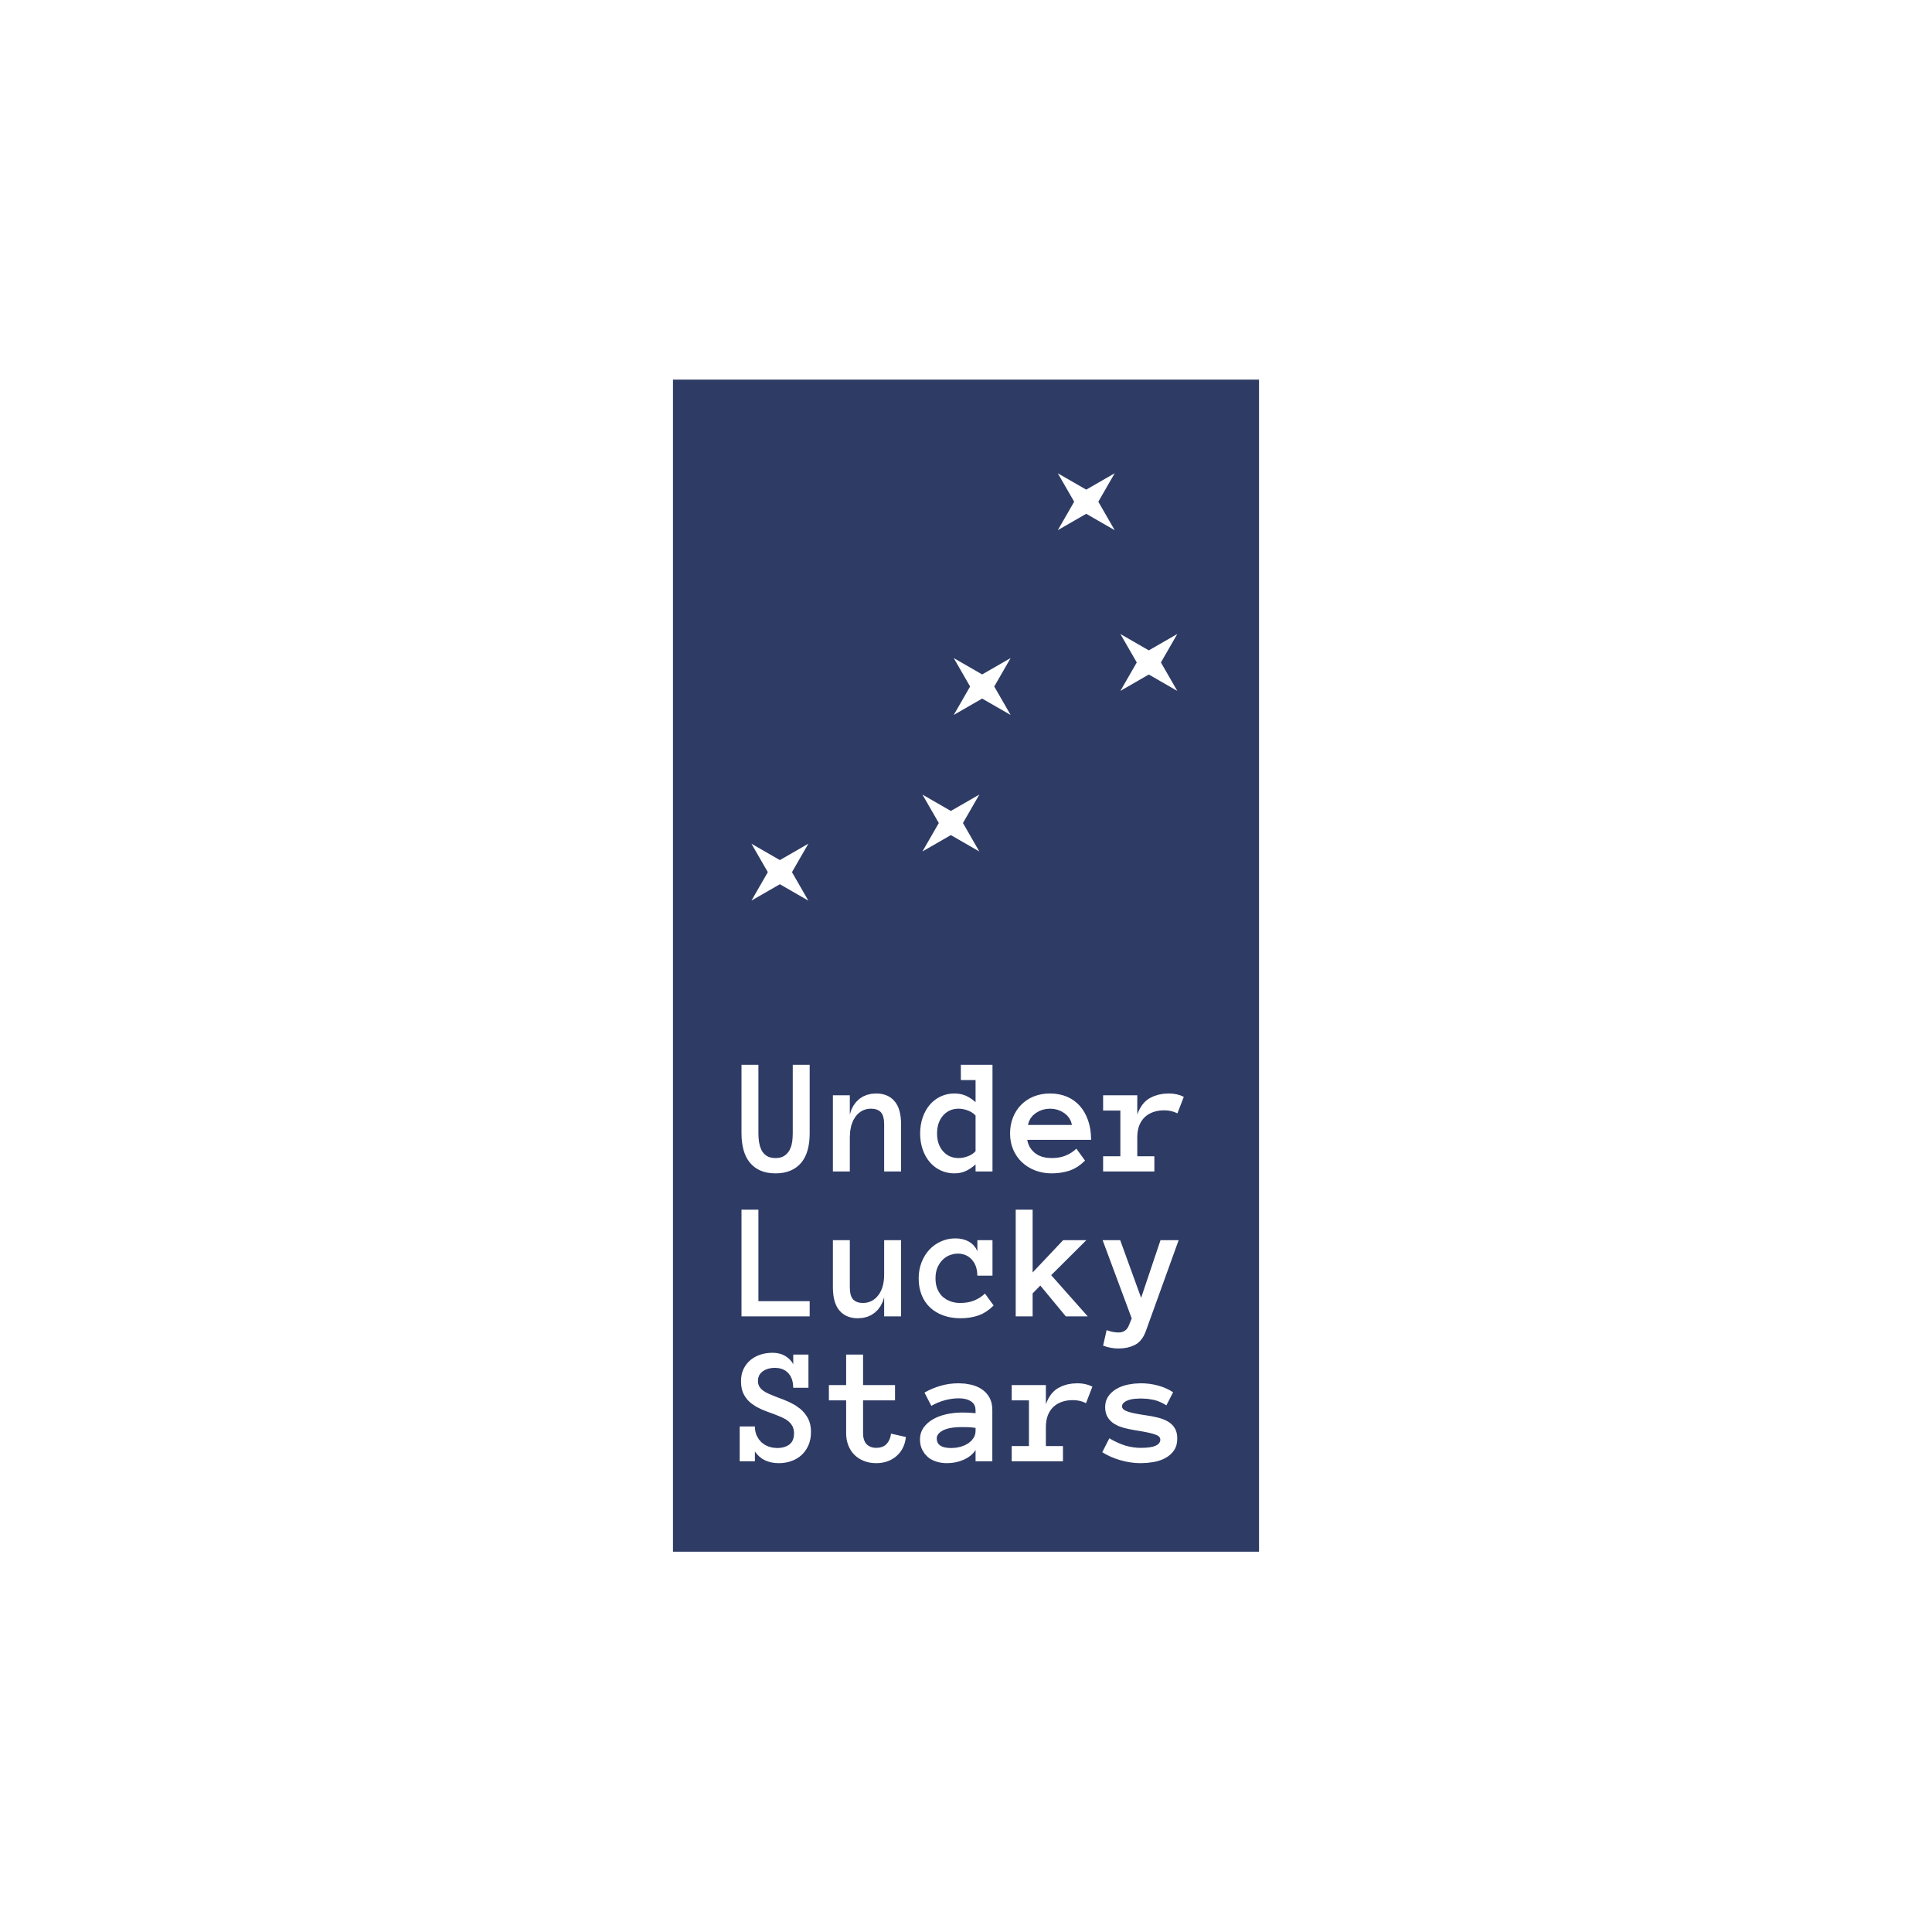 Under Lucky Stars